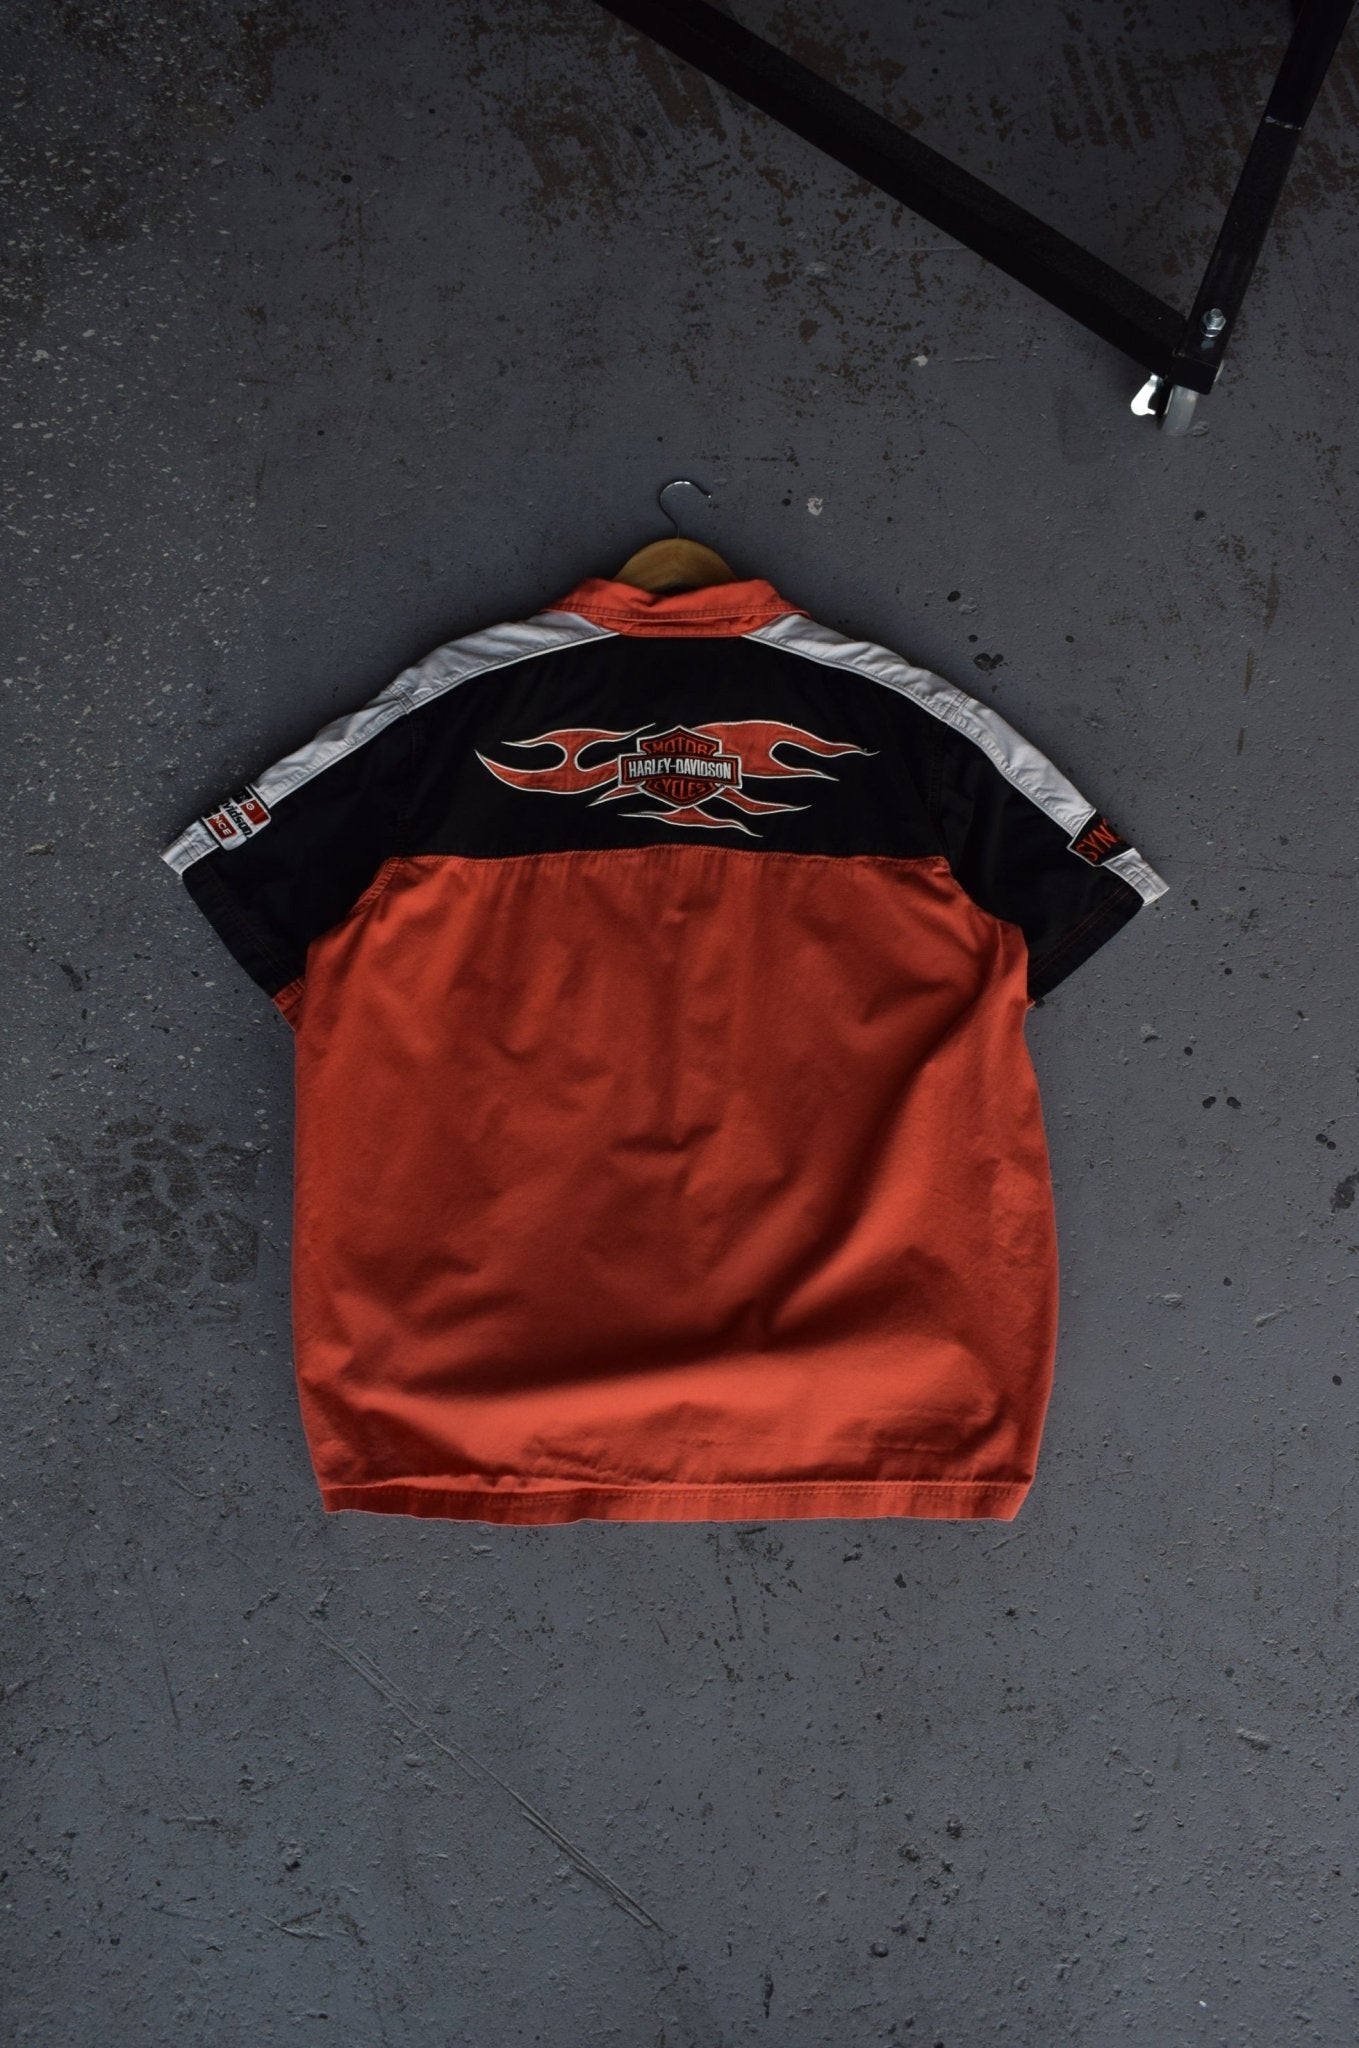 Vintage Harley Davidson Racing Performance Shirt (XL) - Retrospective Store